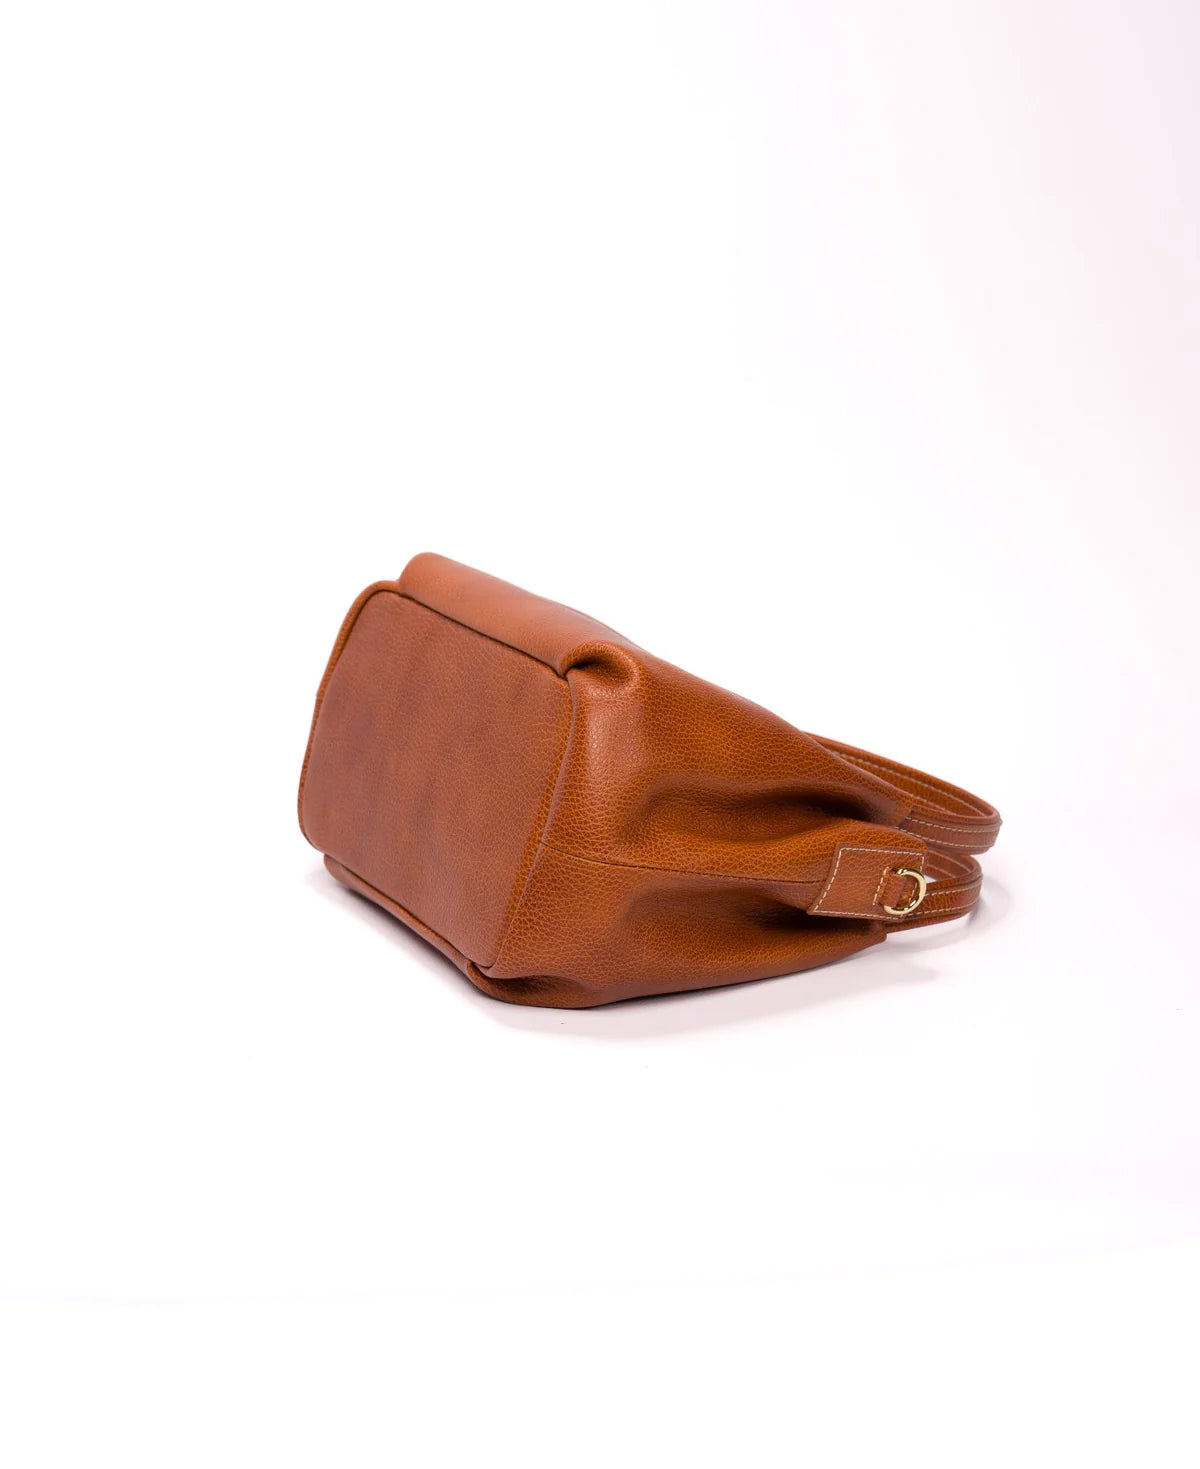 BIDINIS Uffizi soft leather bag